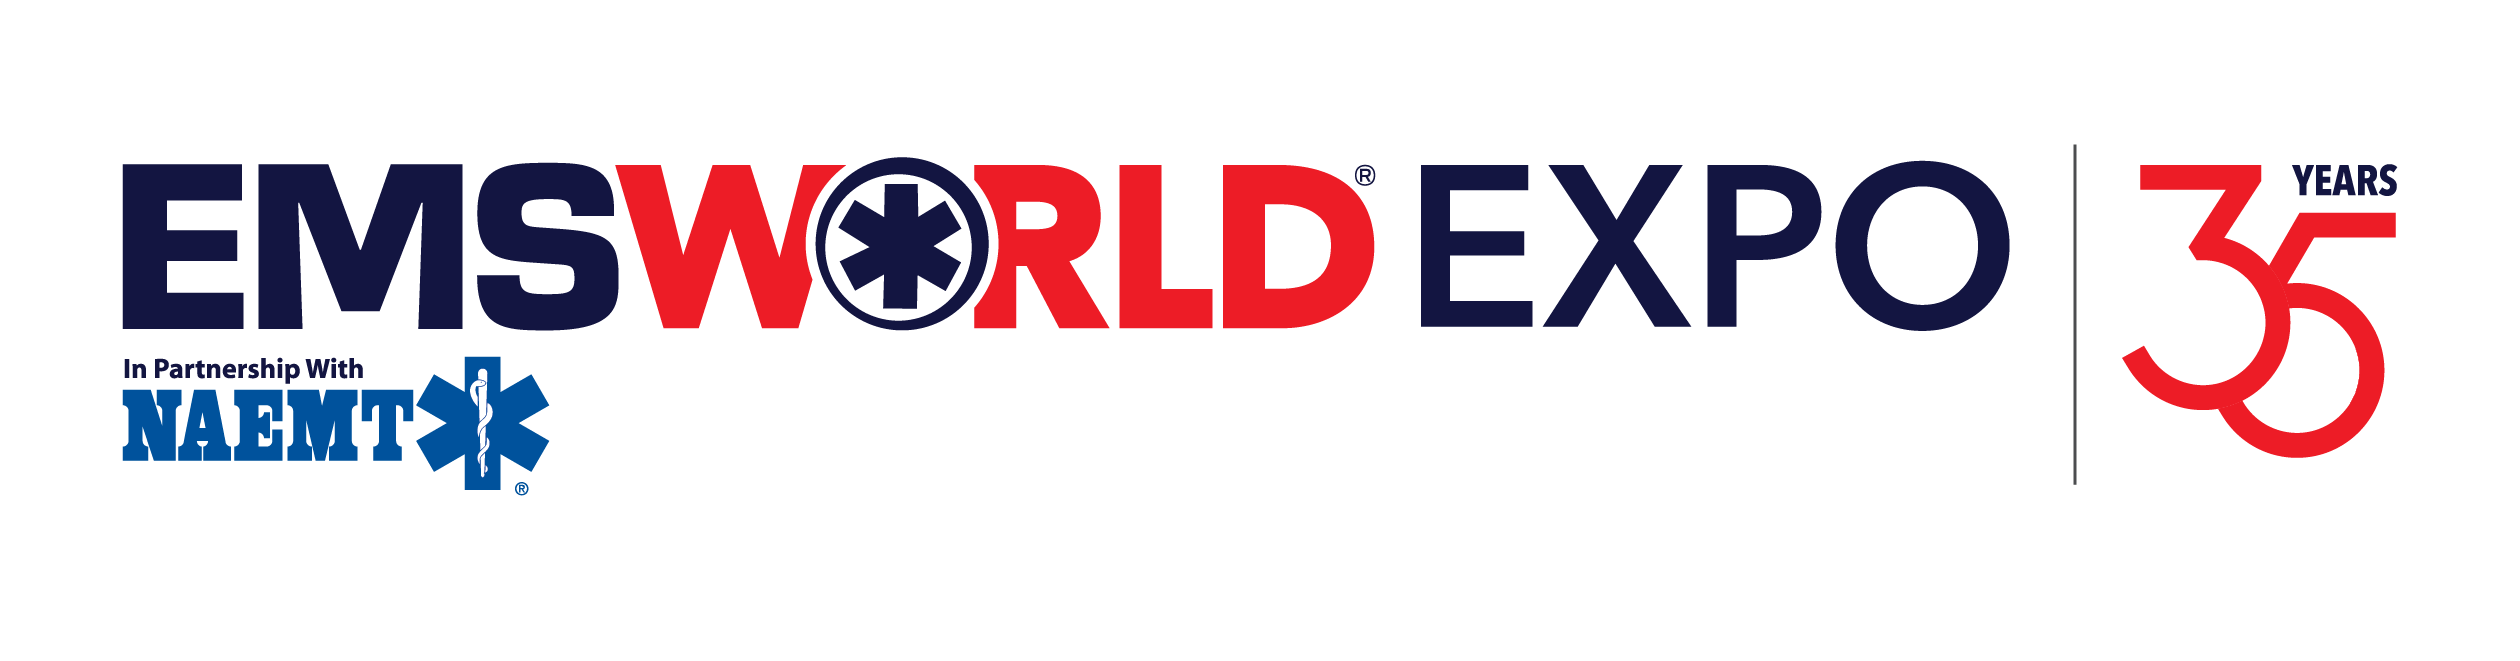 EMS WORLD EXPO LOGO